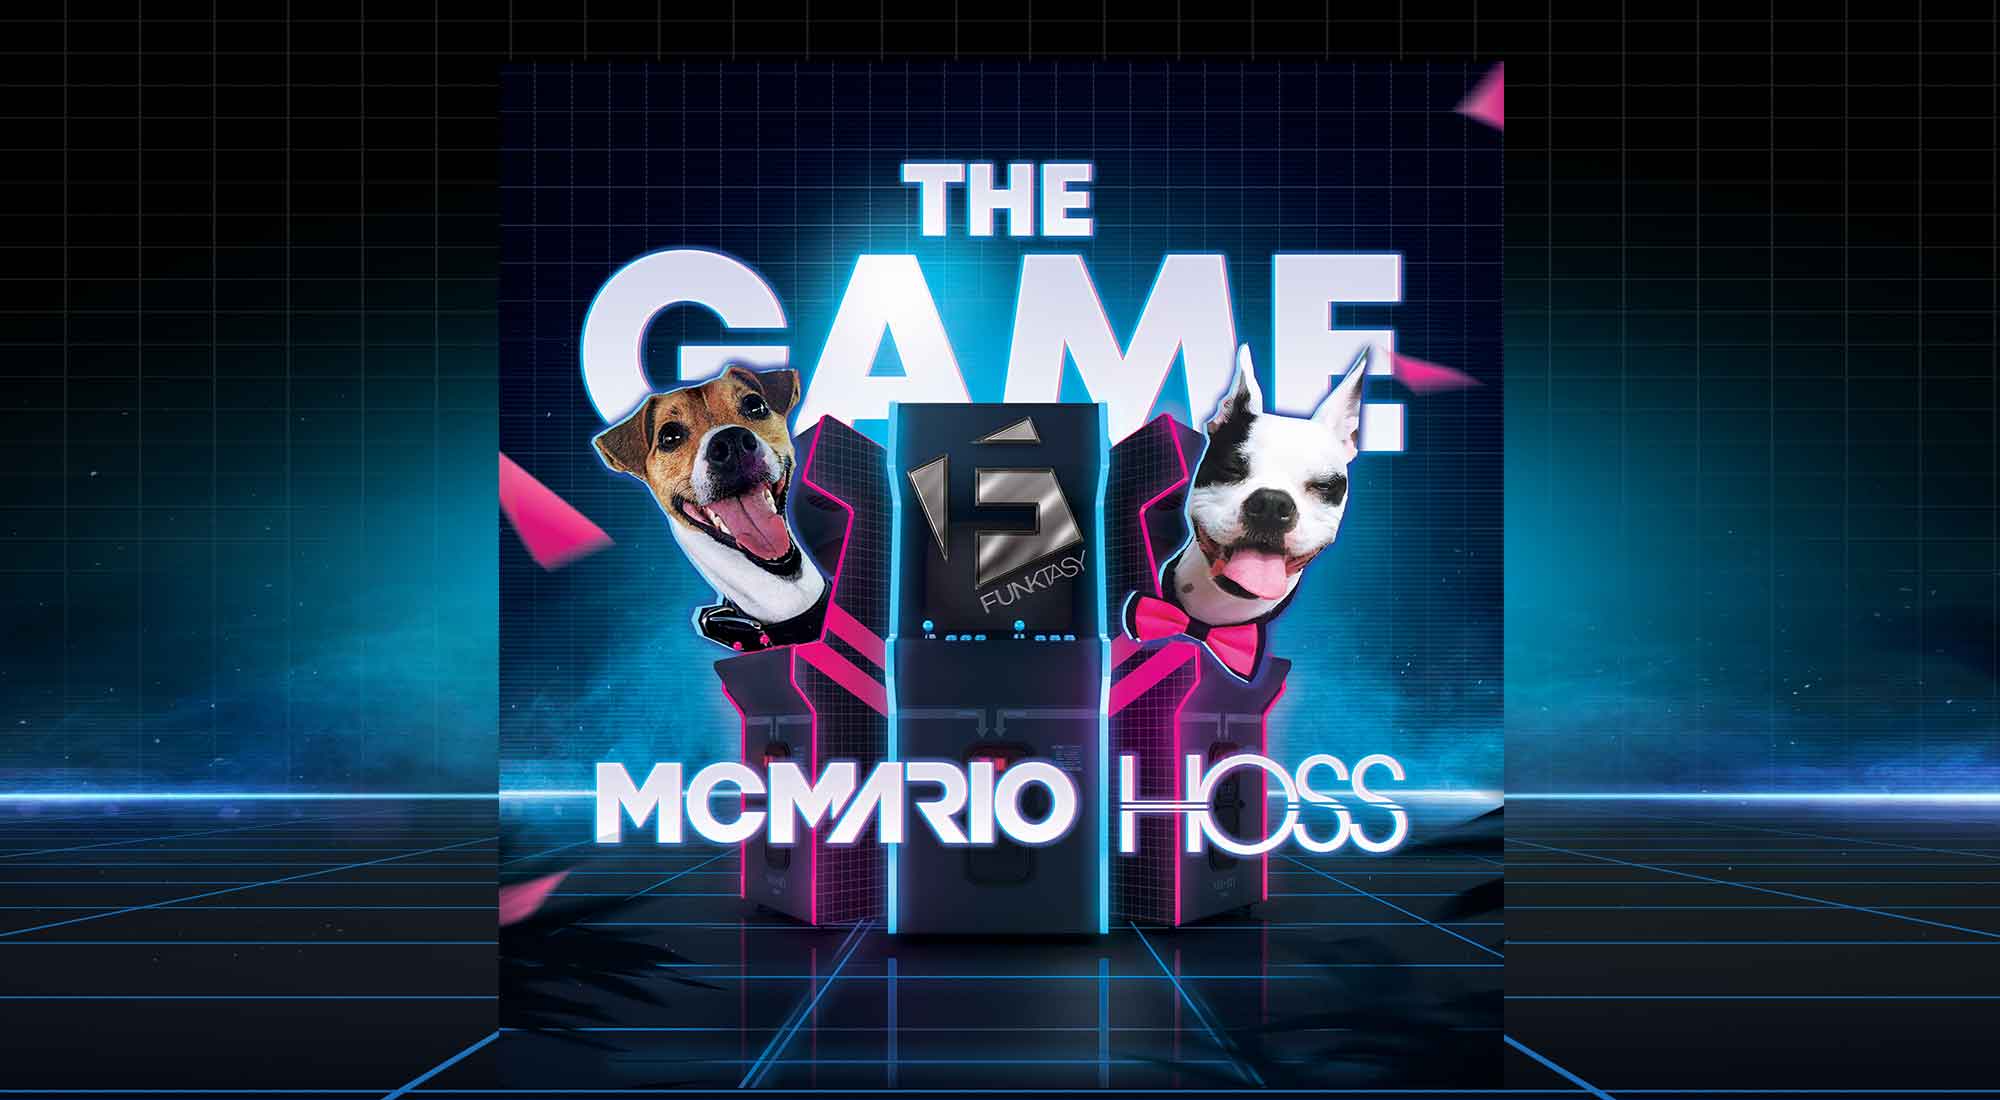 MC Mario & Hoss - The Game